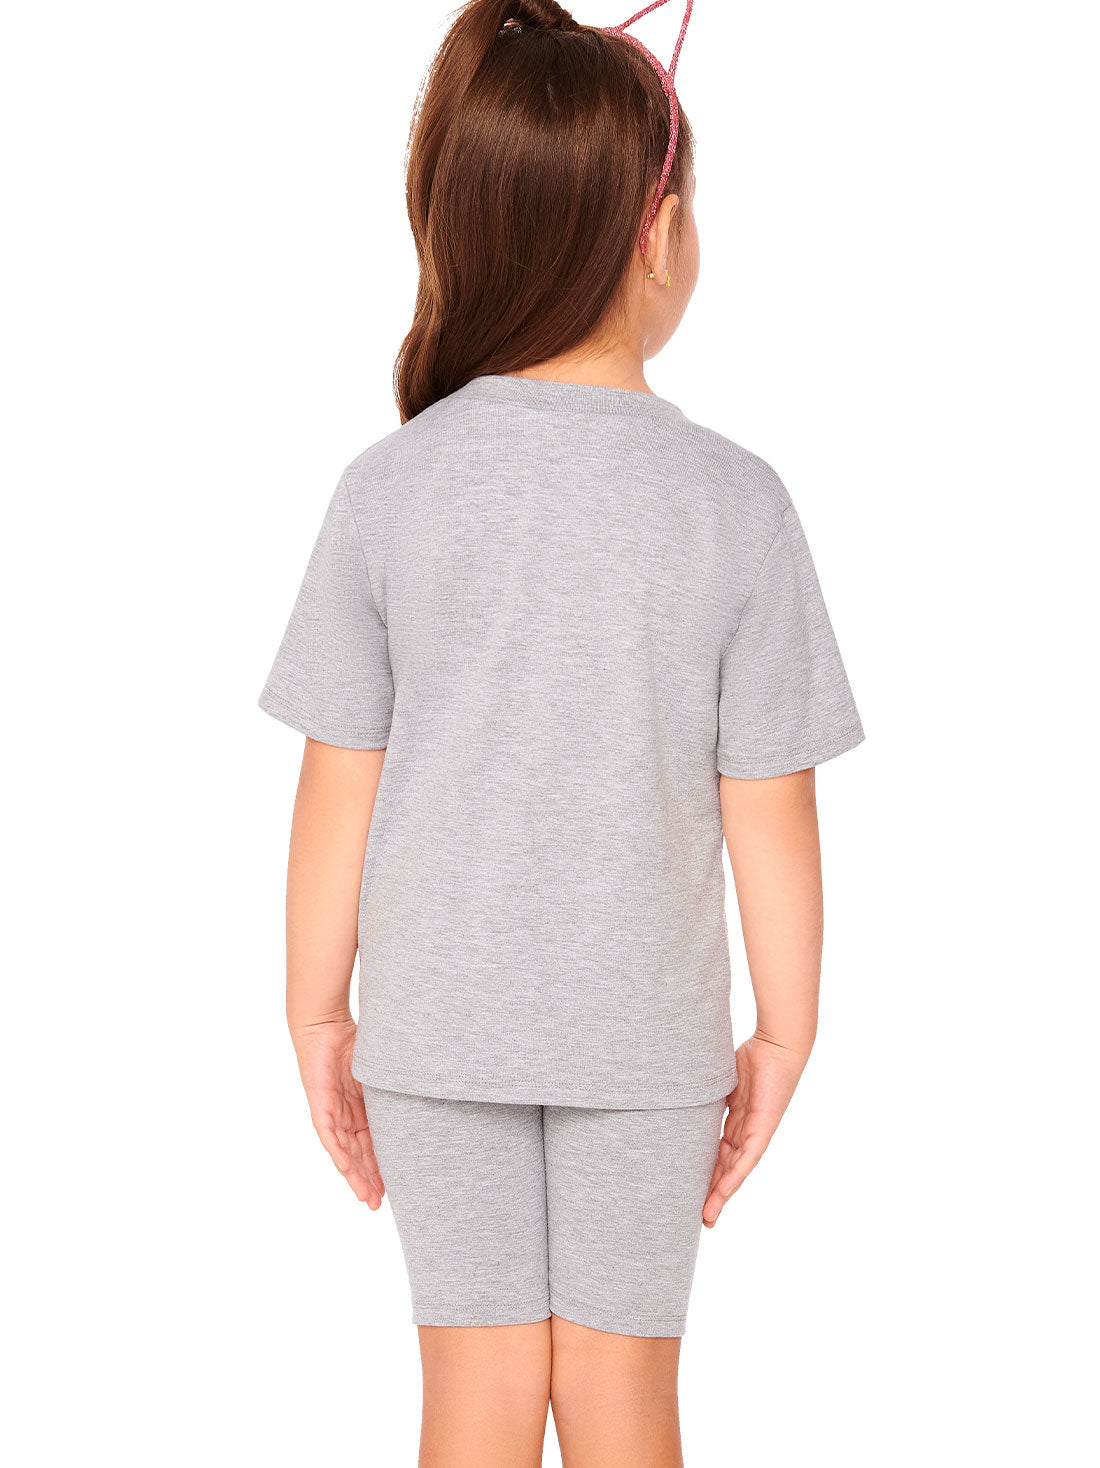 Light Gray T-Shirt and Shorts Set 19005